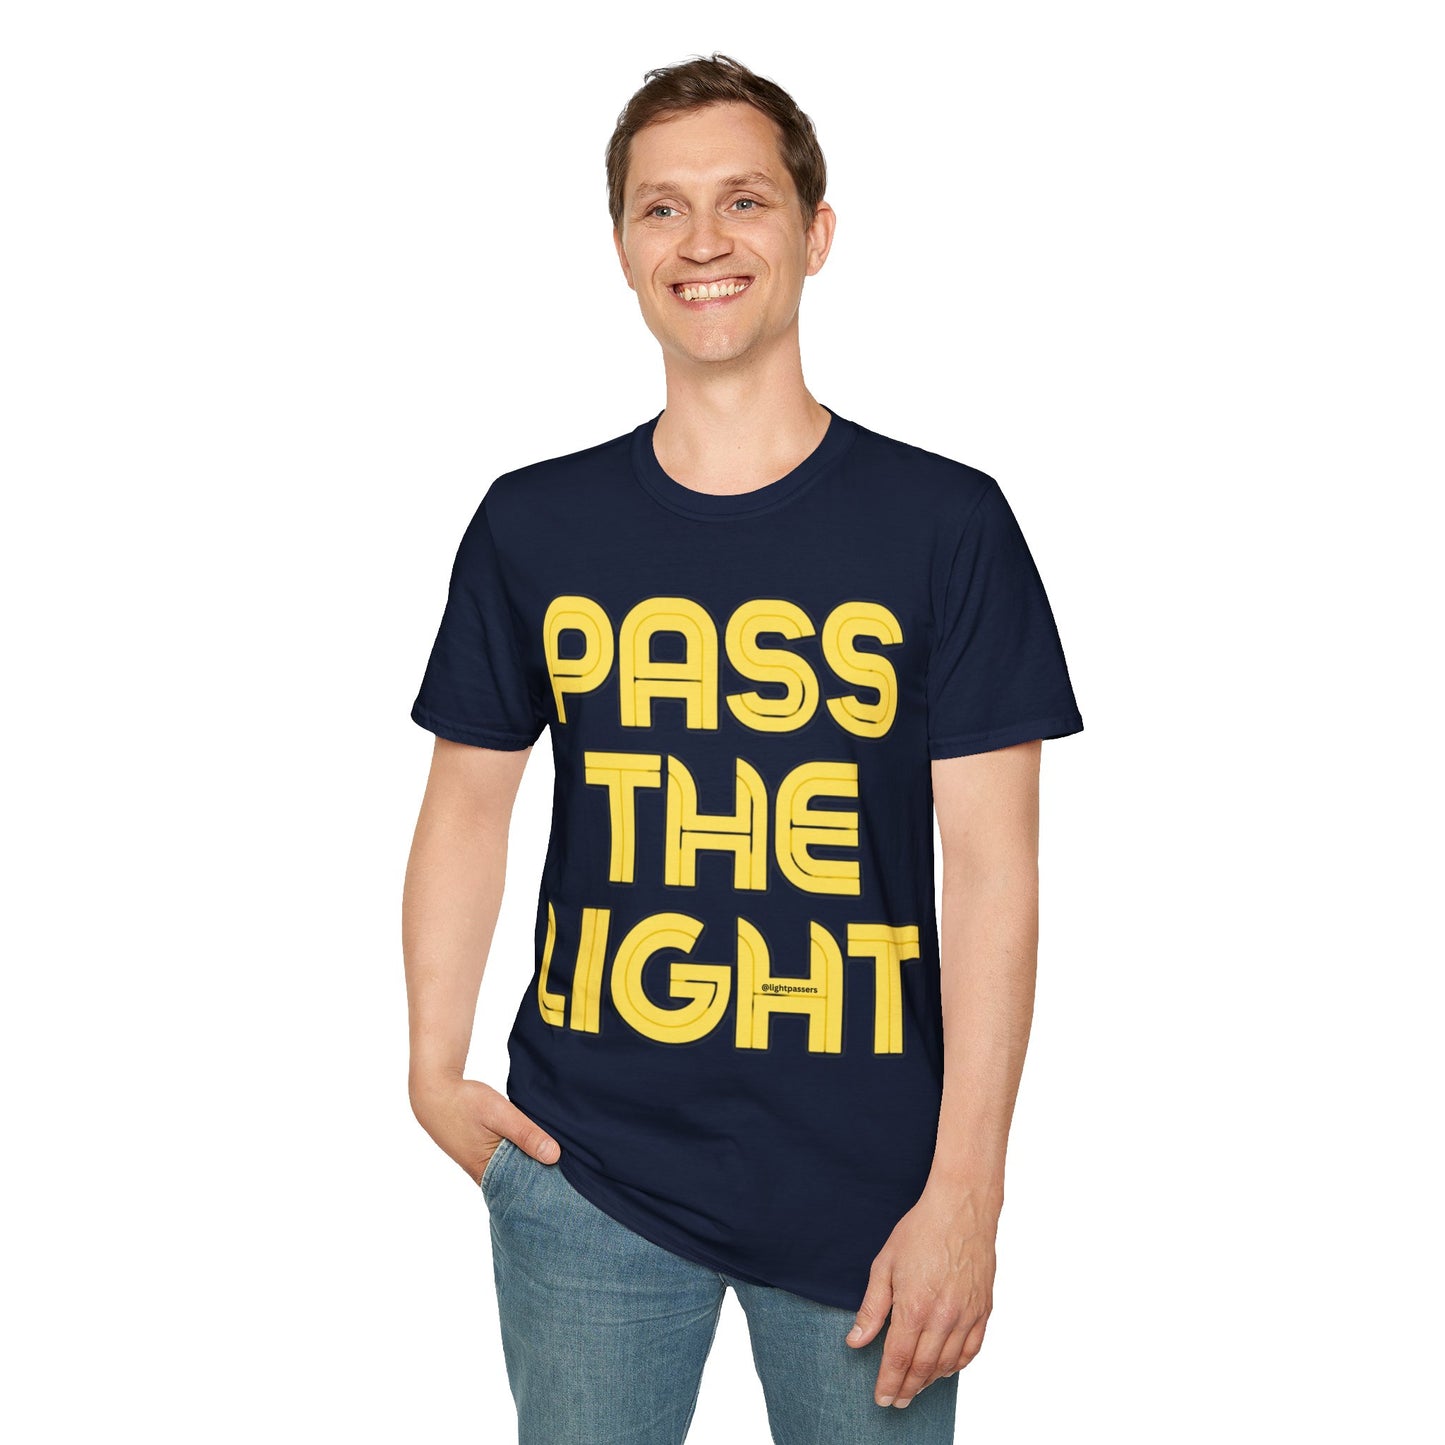 Light Passers Marketplace "PASS THE LIGHT" Unisex Soft Cotton T-shirt Simple Messages